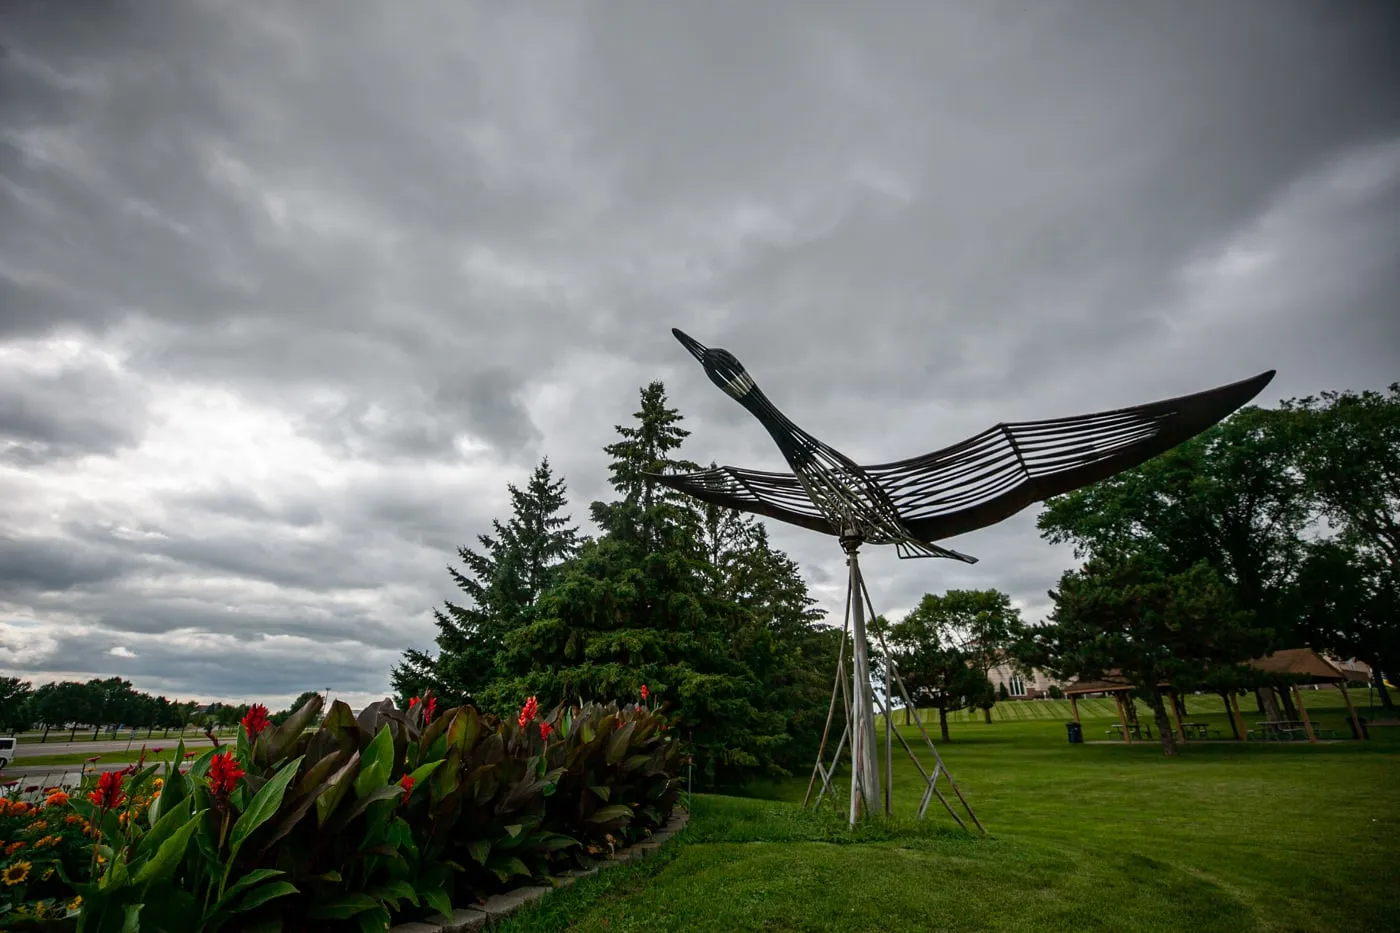 Super Goose - Large Canada Goose Sculpture in Fergus Falls, Minnesota | Minnesota roadside attractions